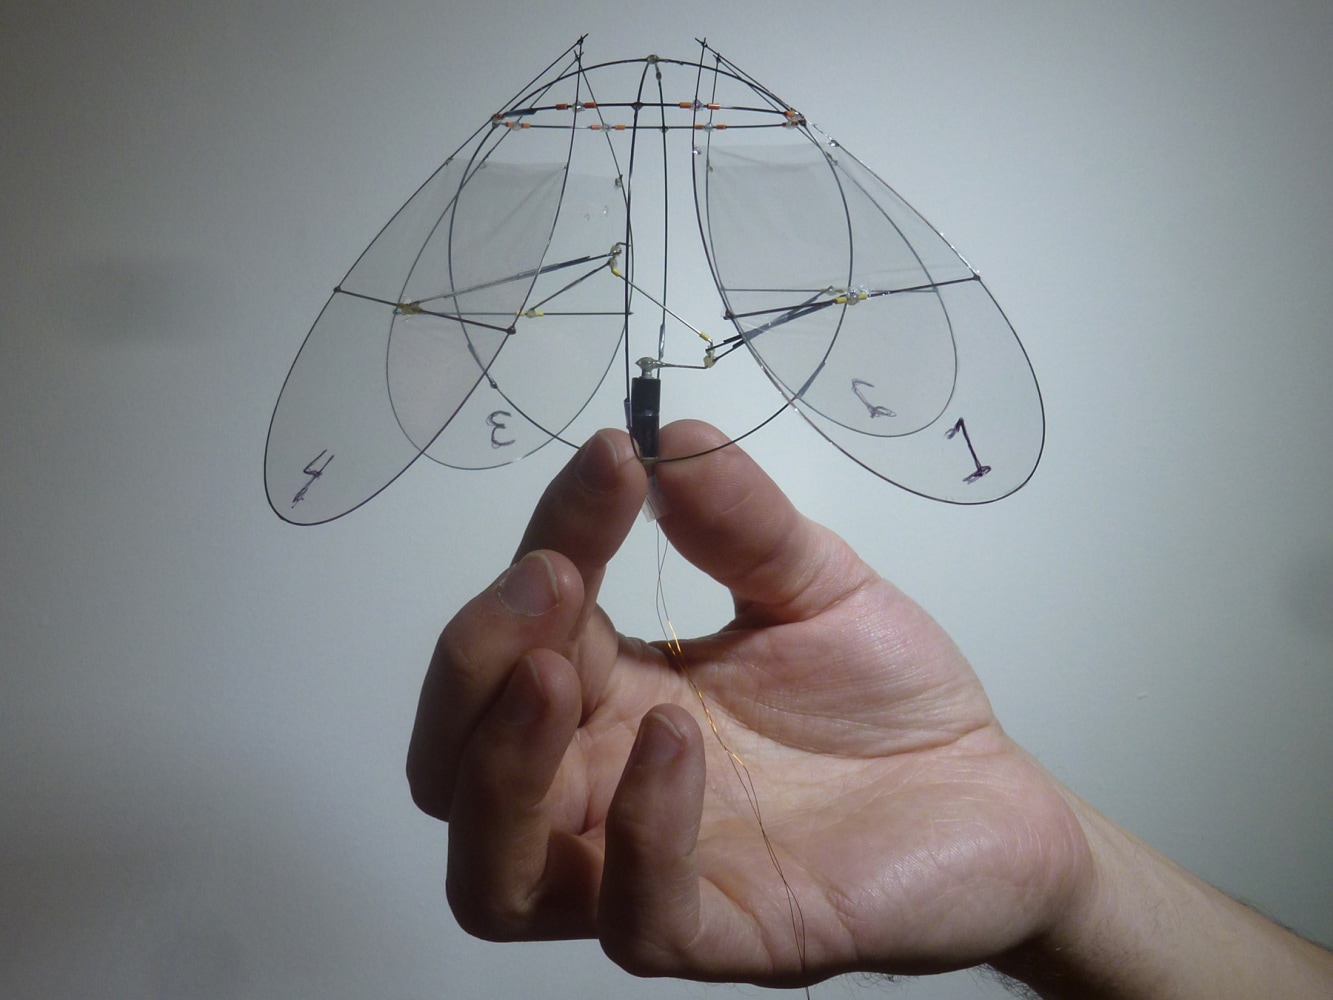 Tiny flying robot soars like a ... jellyfish? - NBC News